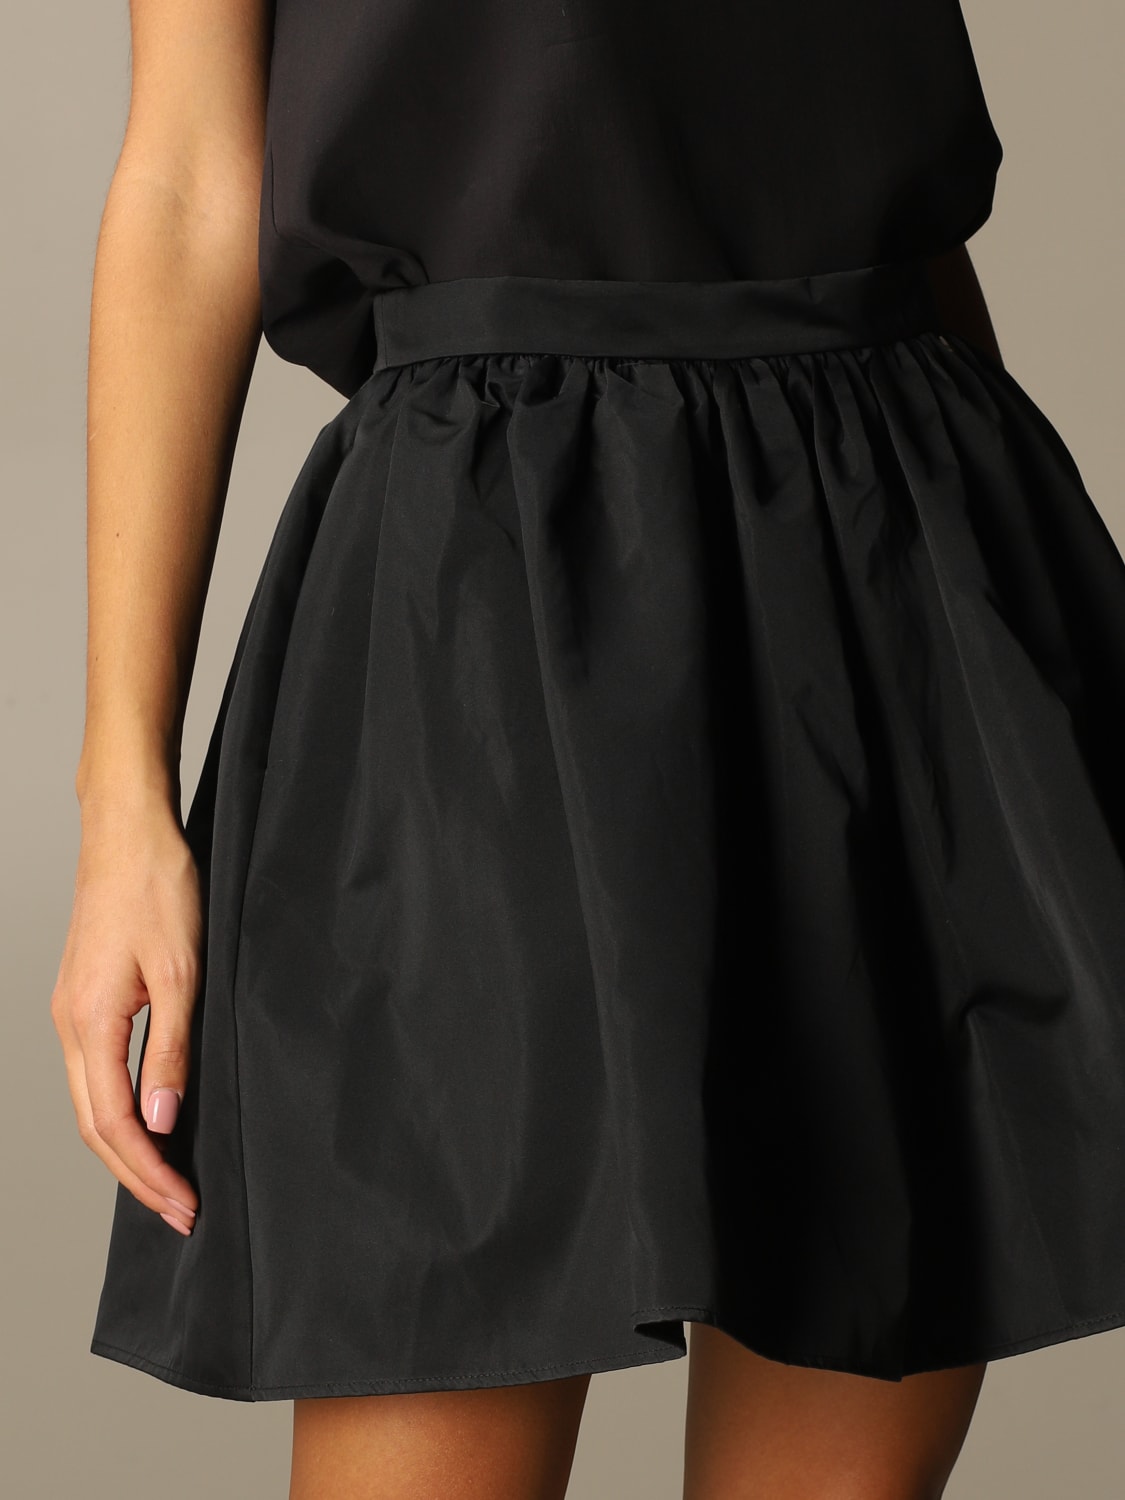 Twinset Skirt For Women Black Twinset Skirt 202tp2453 Online On Gigliocom 4795